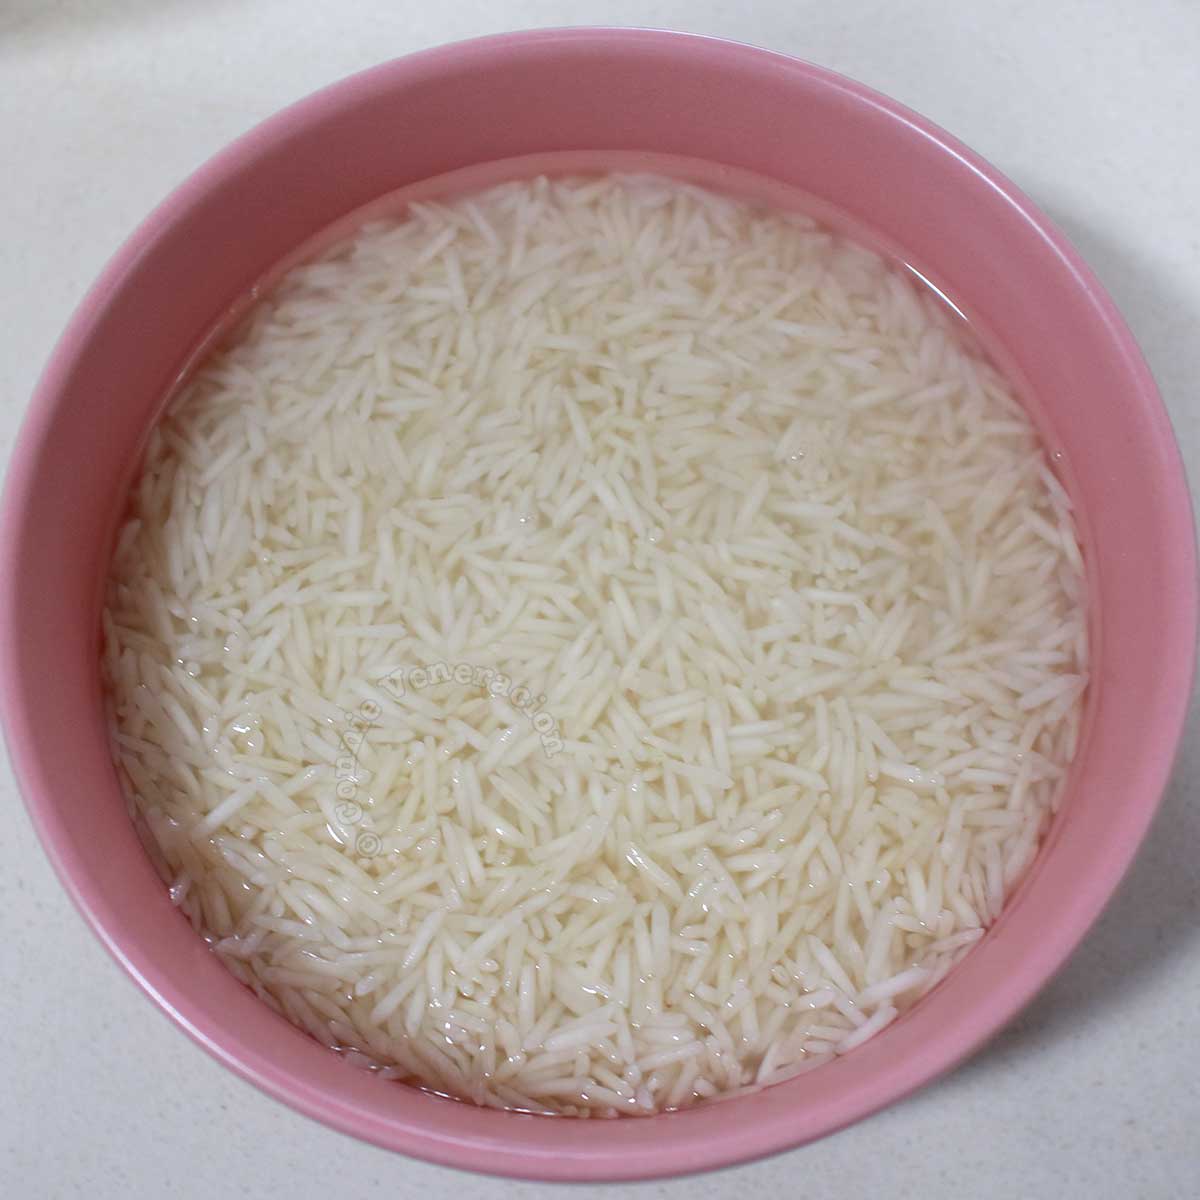 Basmati rice soaking in water